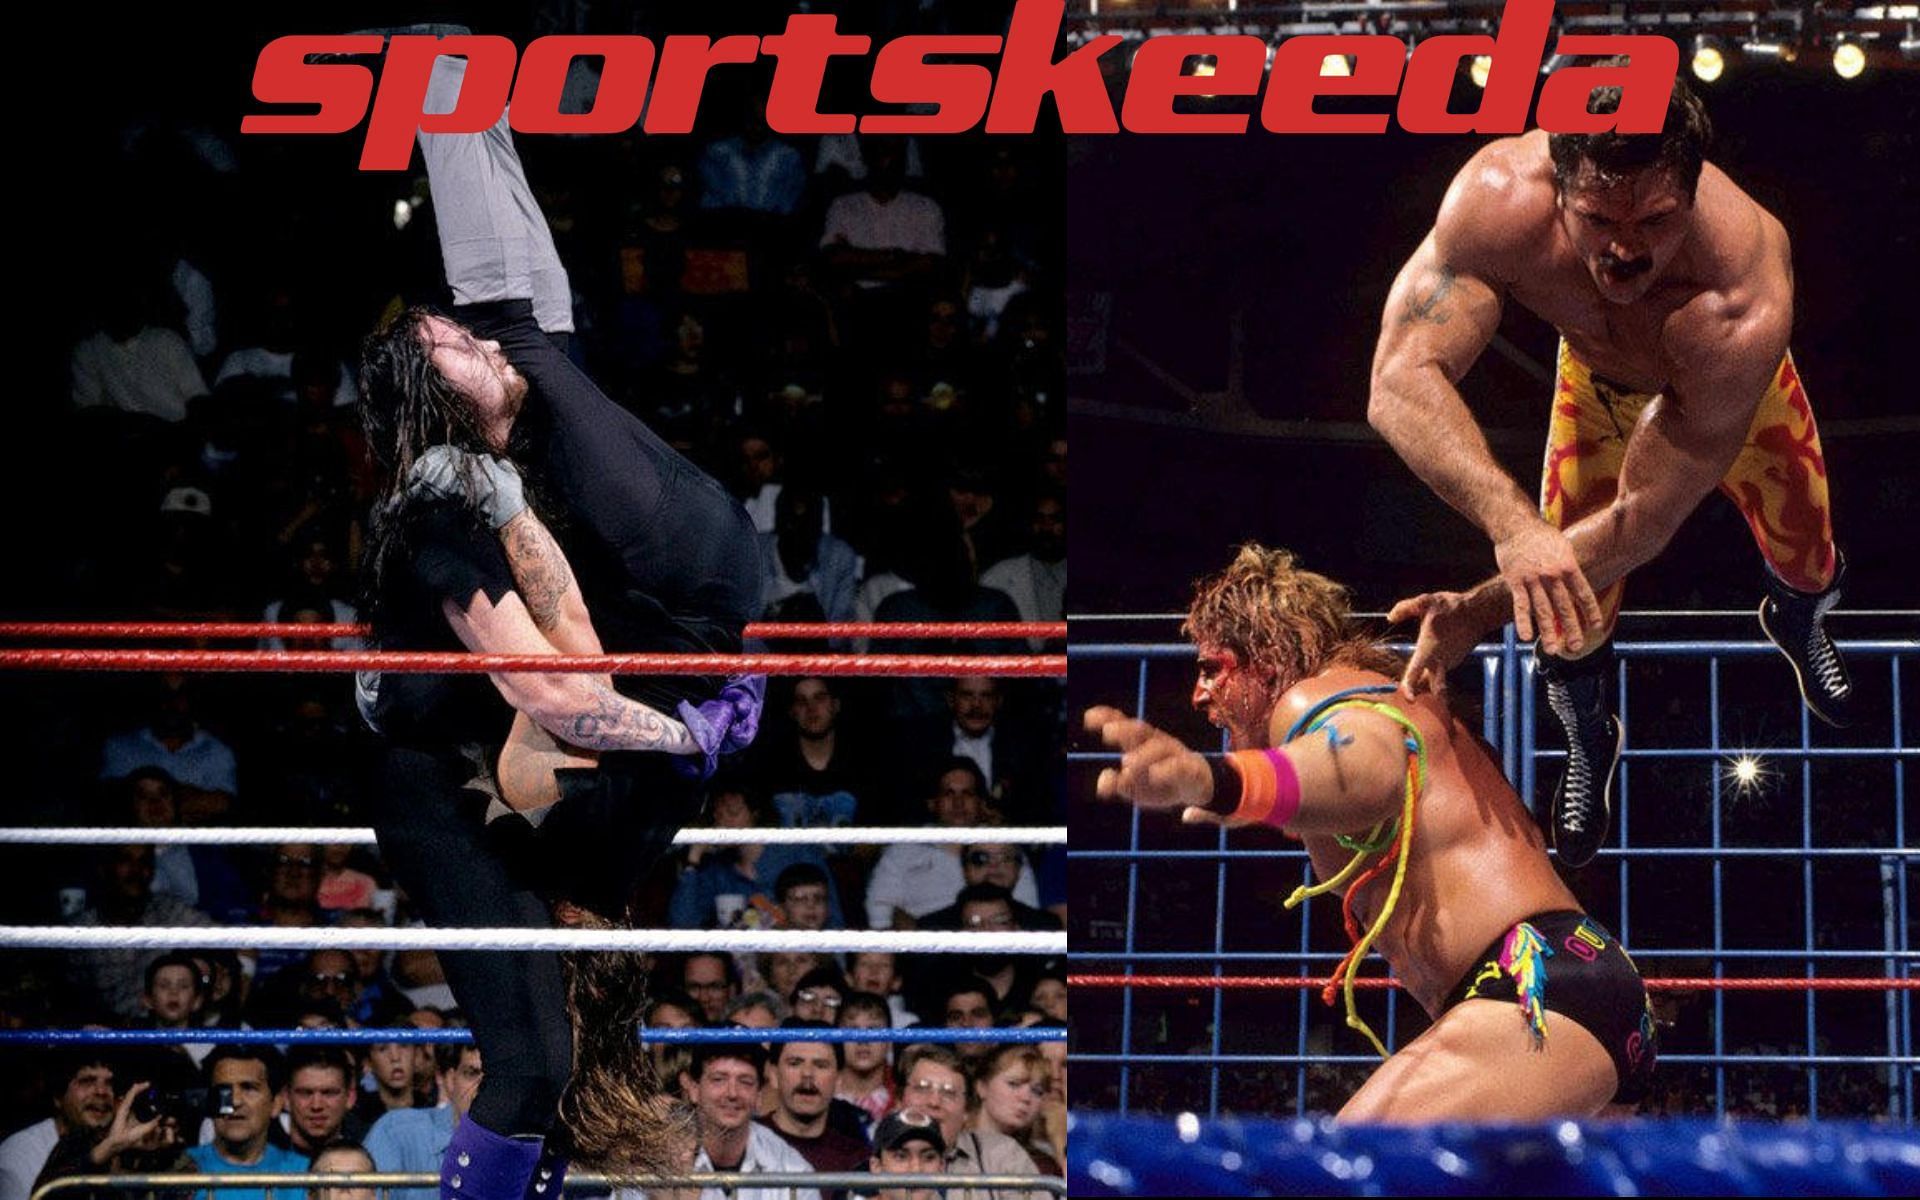 Taker vs. Taker at Summerslam 1994, and Warrior vs. Rude at Summerslam 1990.